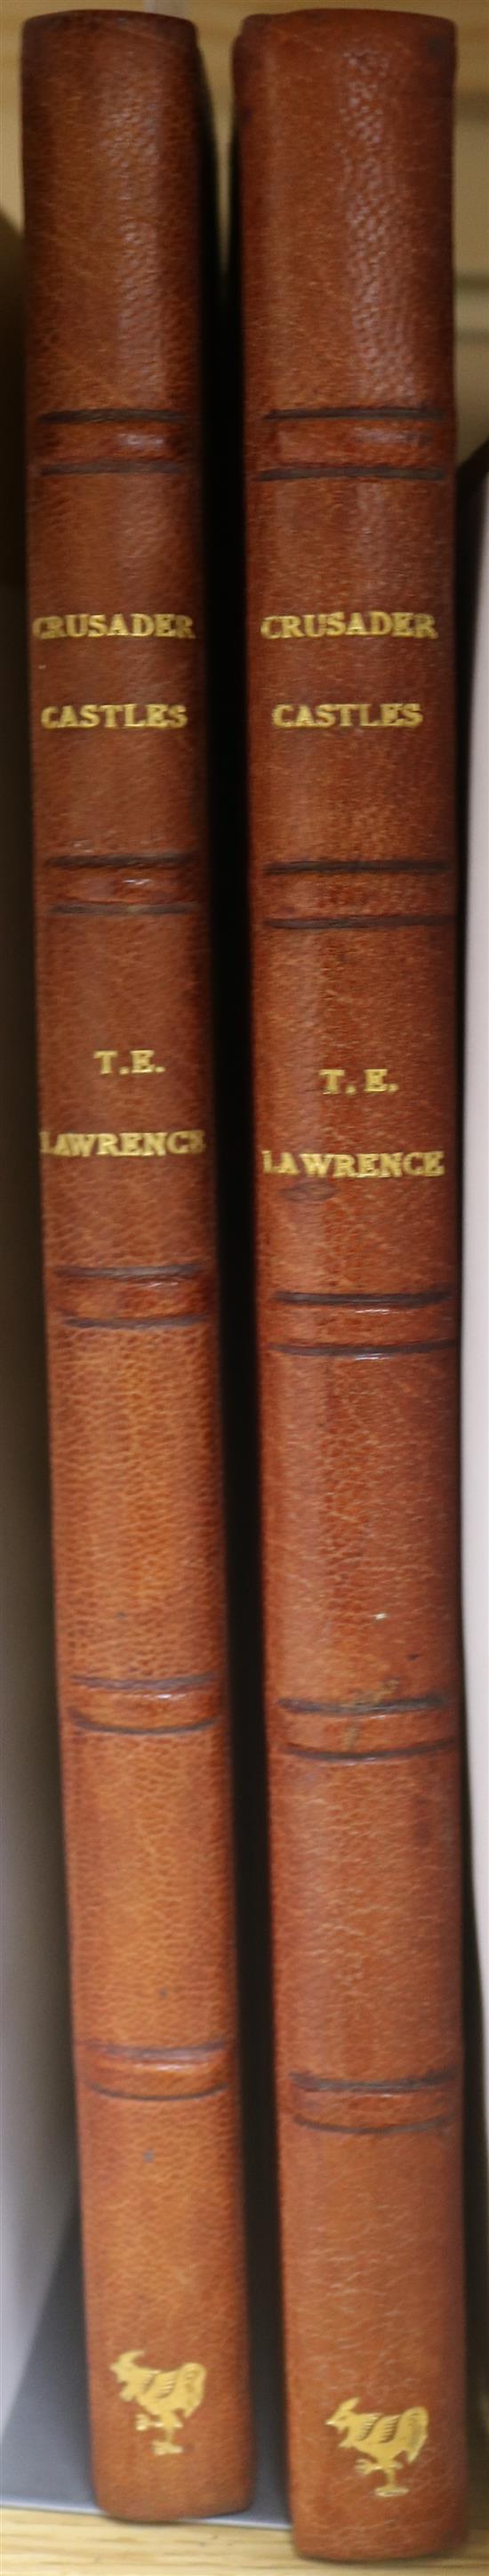 Golden Cockerel Press. Lawrence, Thomas Edward - Crusader Castles,